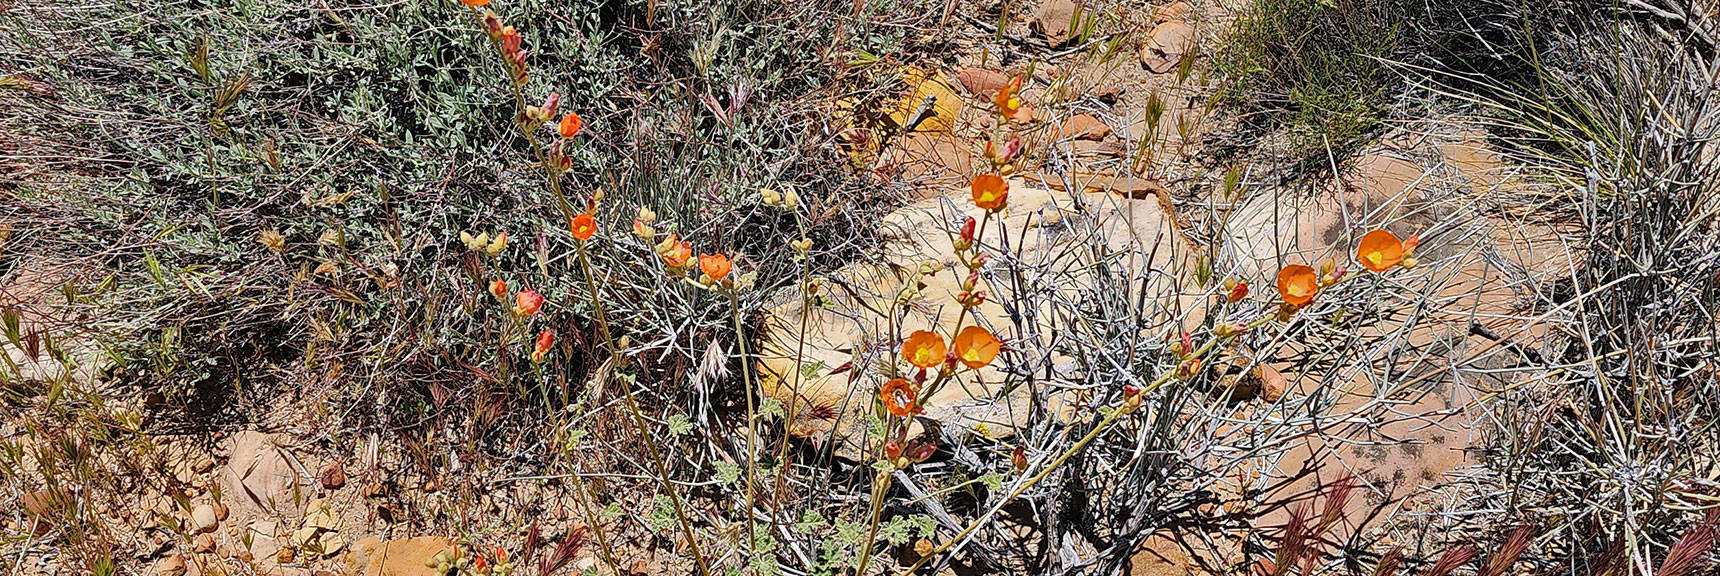 California Poppy : Annual Mojave Desert Wildflowers | Juniper Canyon | Red Rock Canyon National Conservation Area, Nevada | David Smith | LasVegasAreaTrails.com